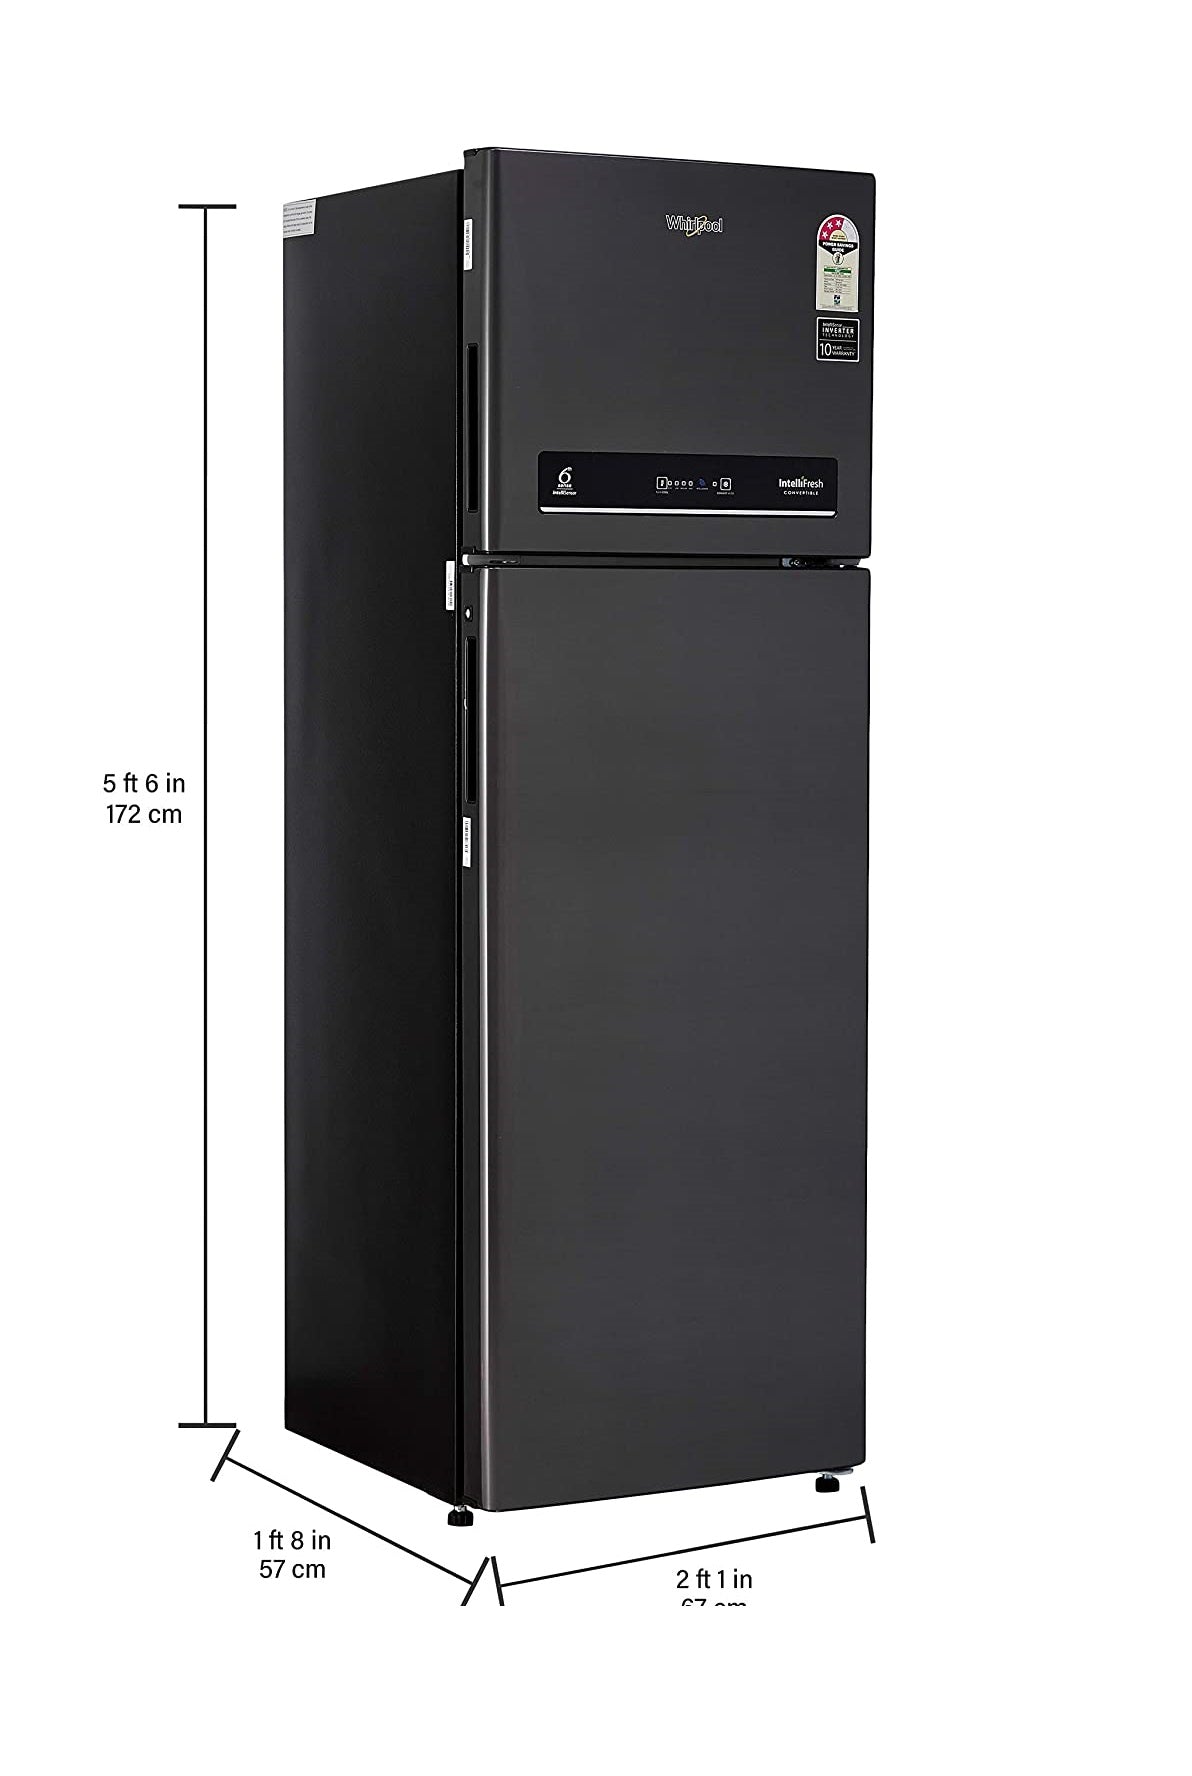 Whirlpool INTELLIFRESH INV CNV 355 3S 340 L 3 Star Inverter Frost-Free Double Door Refrigerator (Steel Onyx) 21284